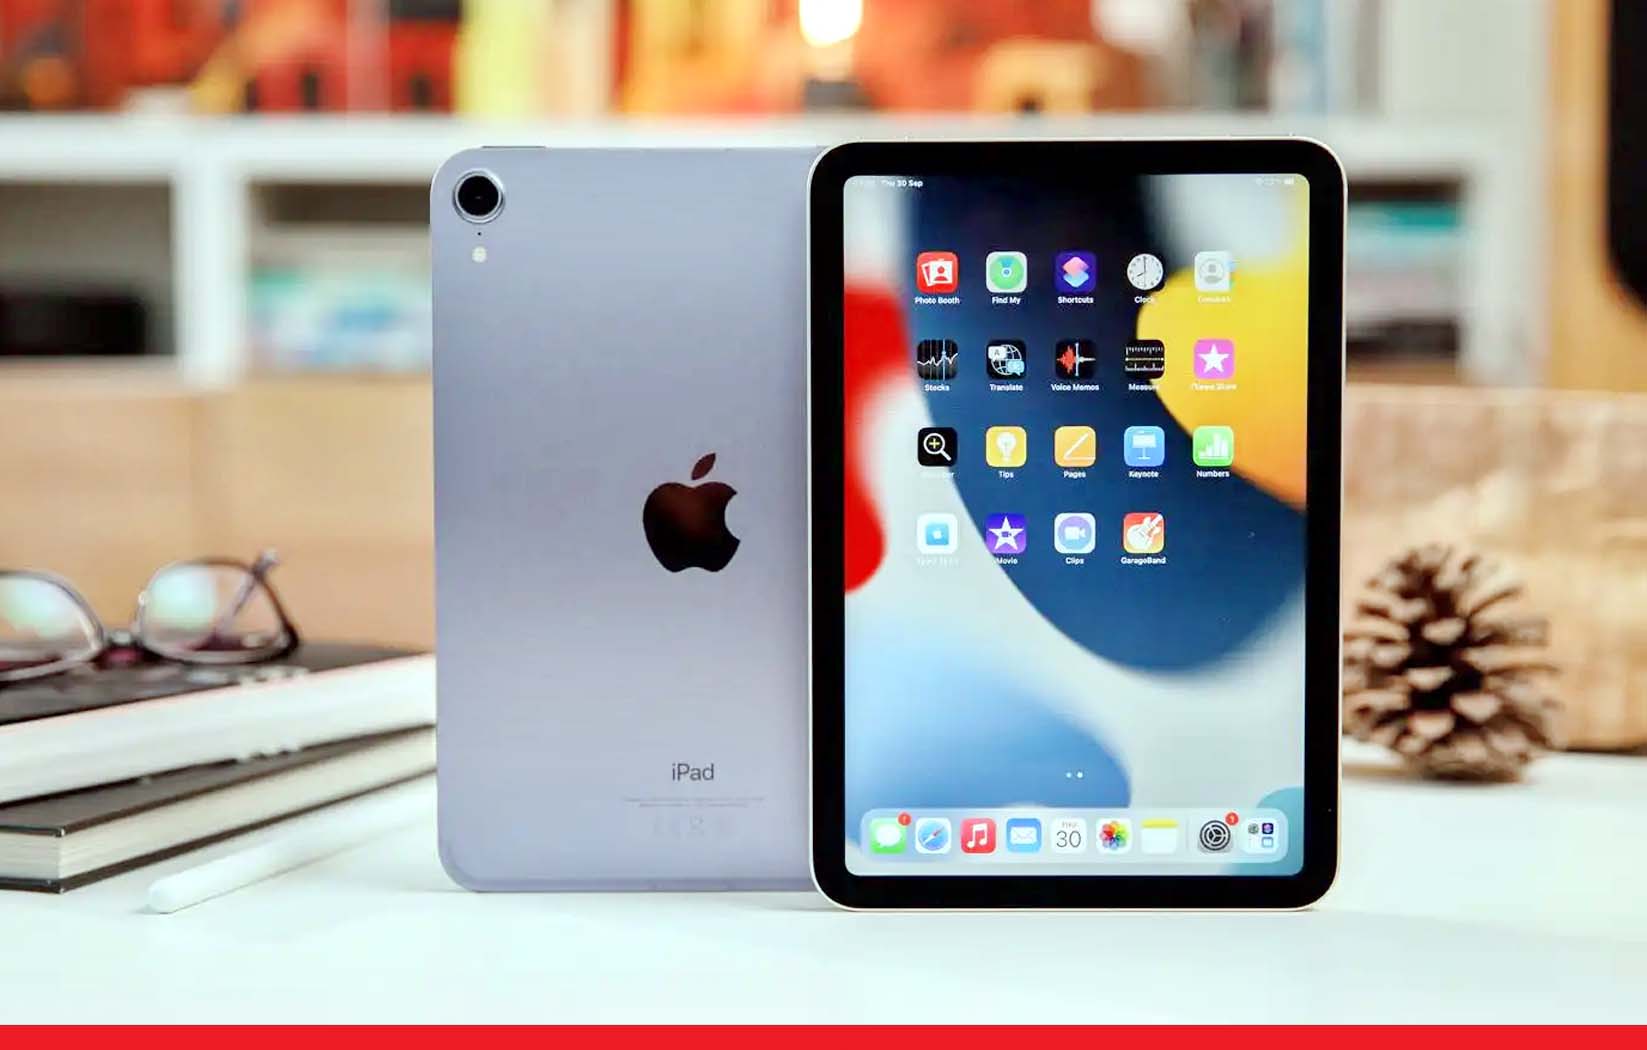 iPad Mini: A compact powerhouse for Israeli users